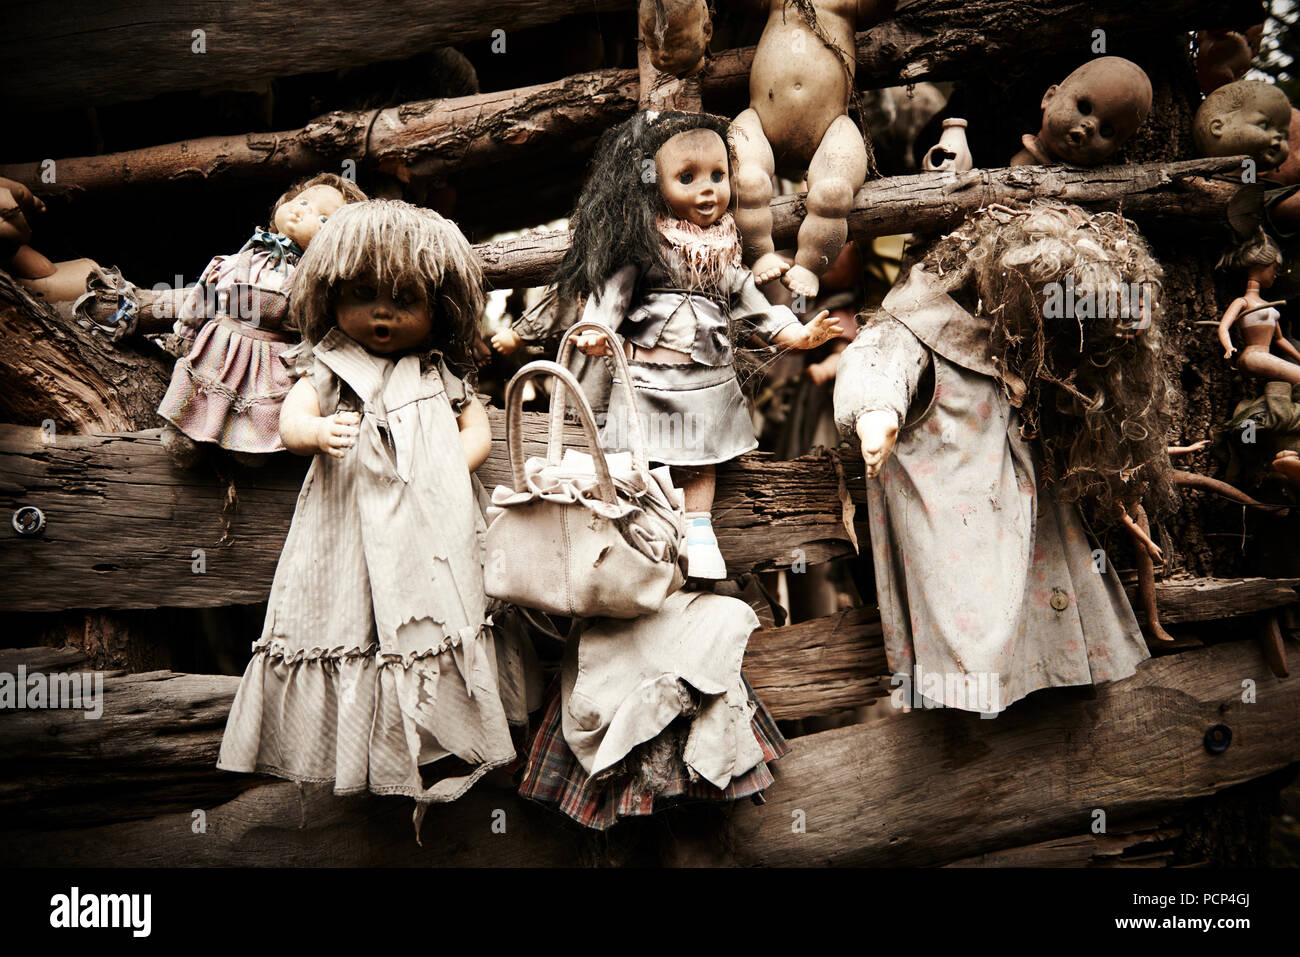 Puppen von La Isla de las Muñecas - Die Insel der Puppen, Xochimilco Mexiko  Stockfotografie - Alamy